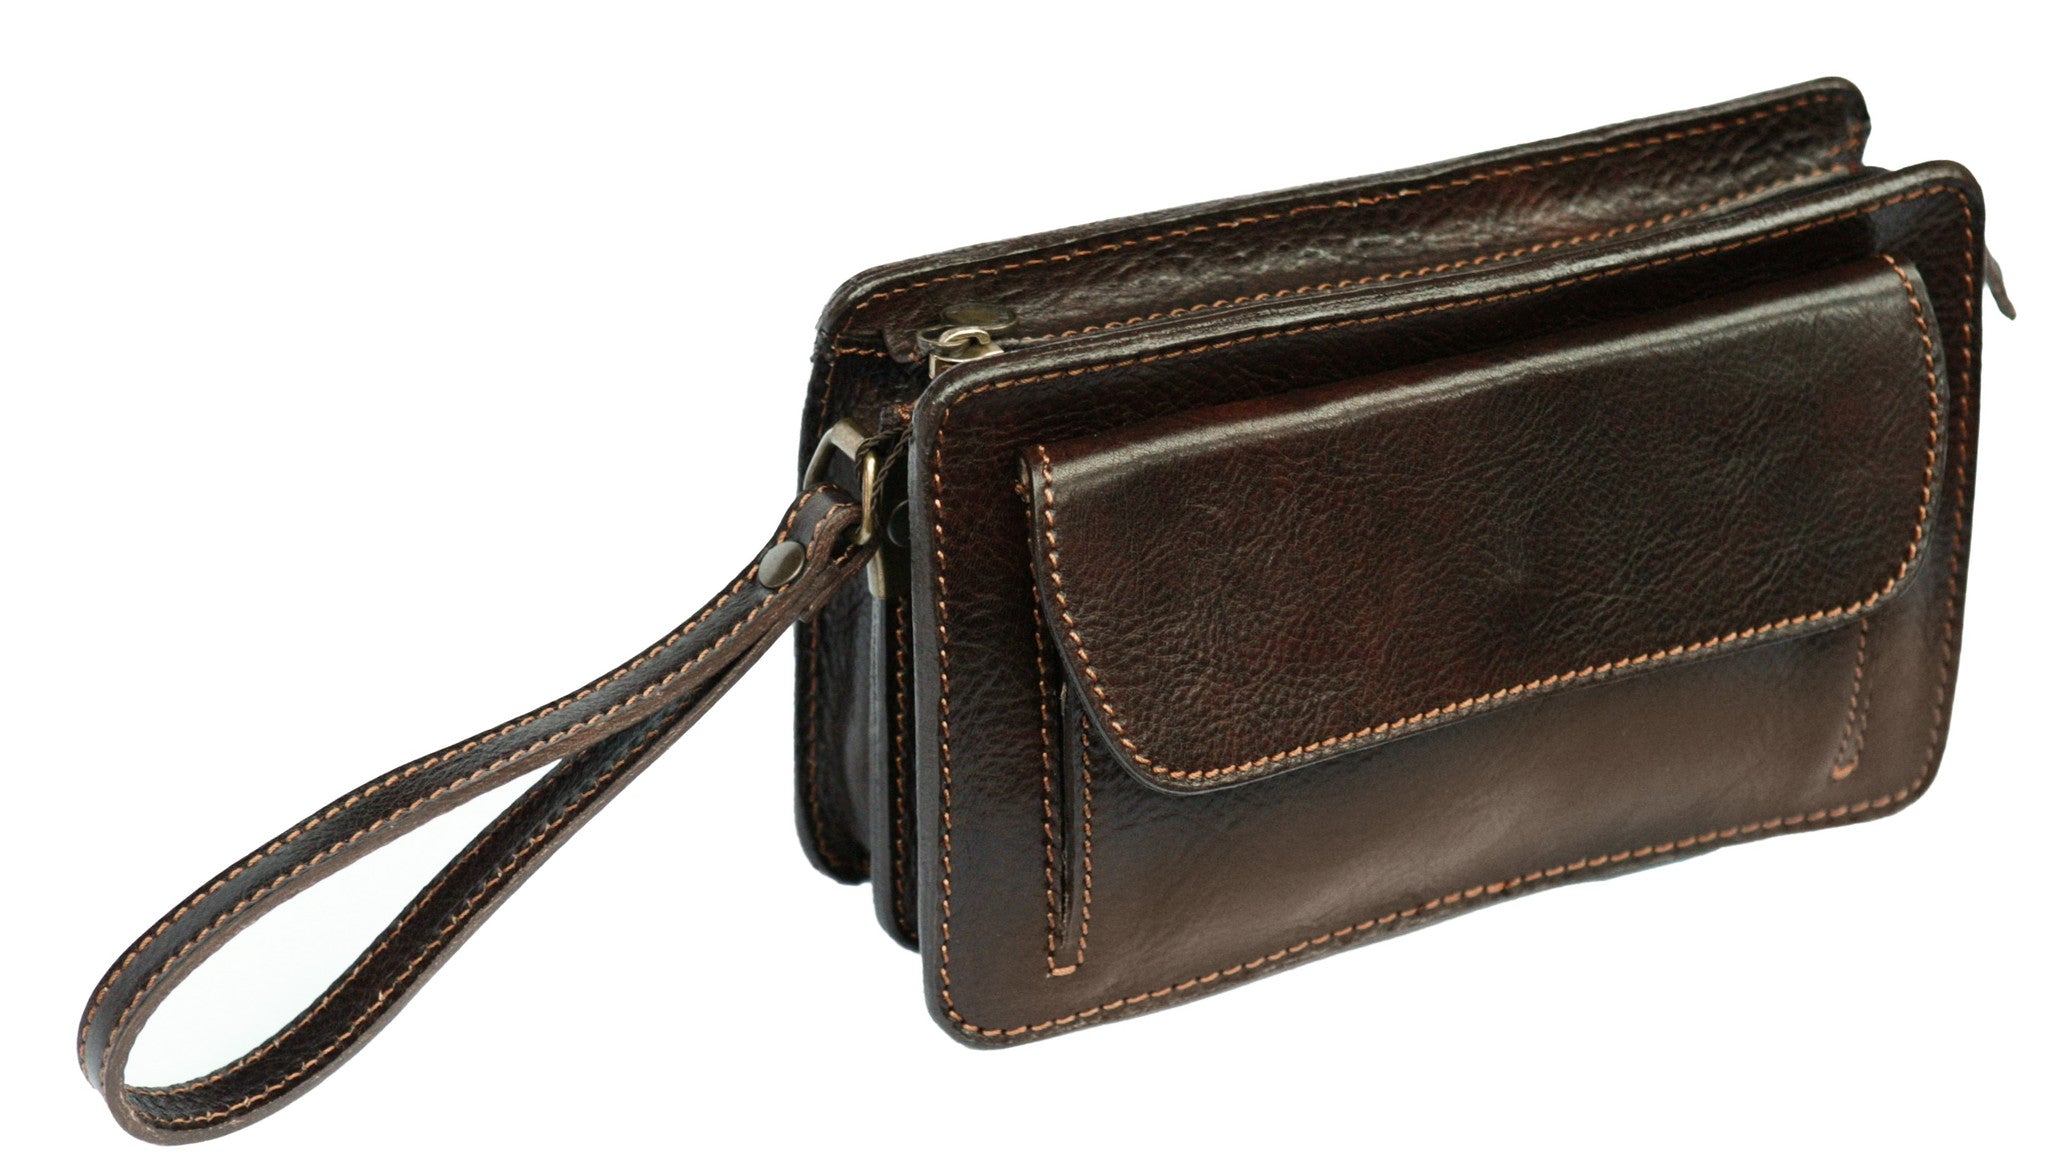 Italian leather Mens Travel Organizer Wrist Bag Clutch - Dark Brown - Rivello Leather